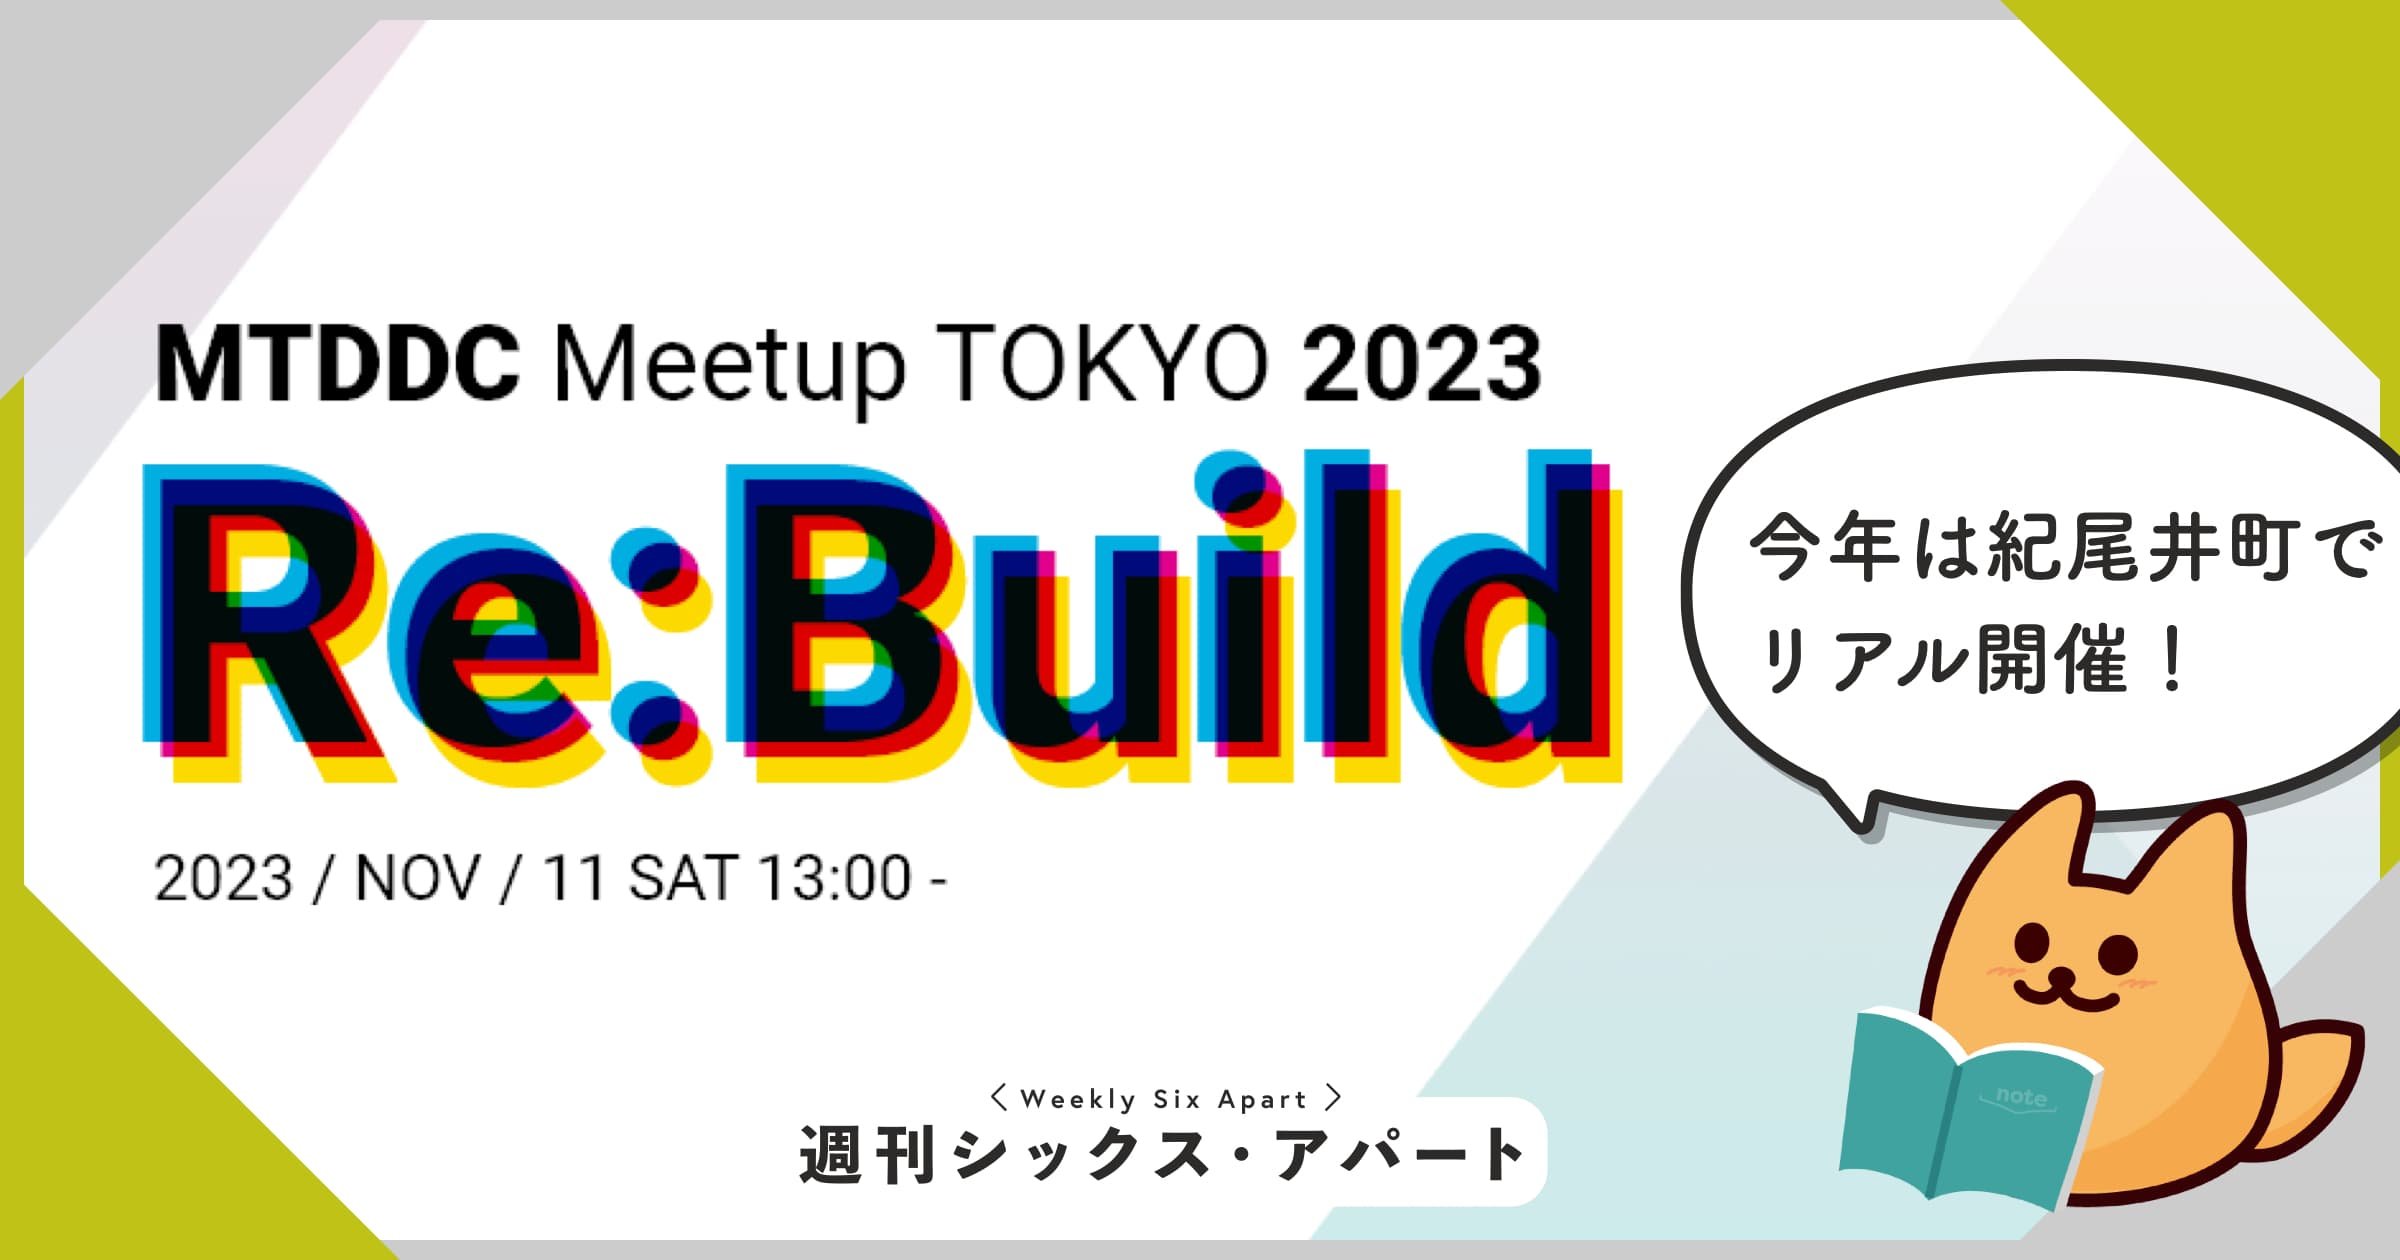 MTDDC Meetup TOKYO 2023、11/11に紀尾井町で開催 #週刊SA